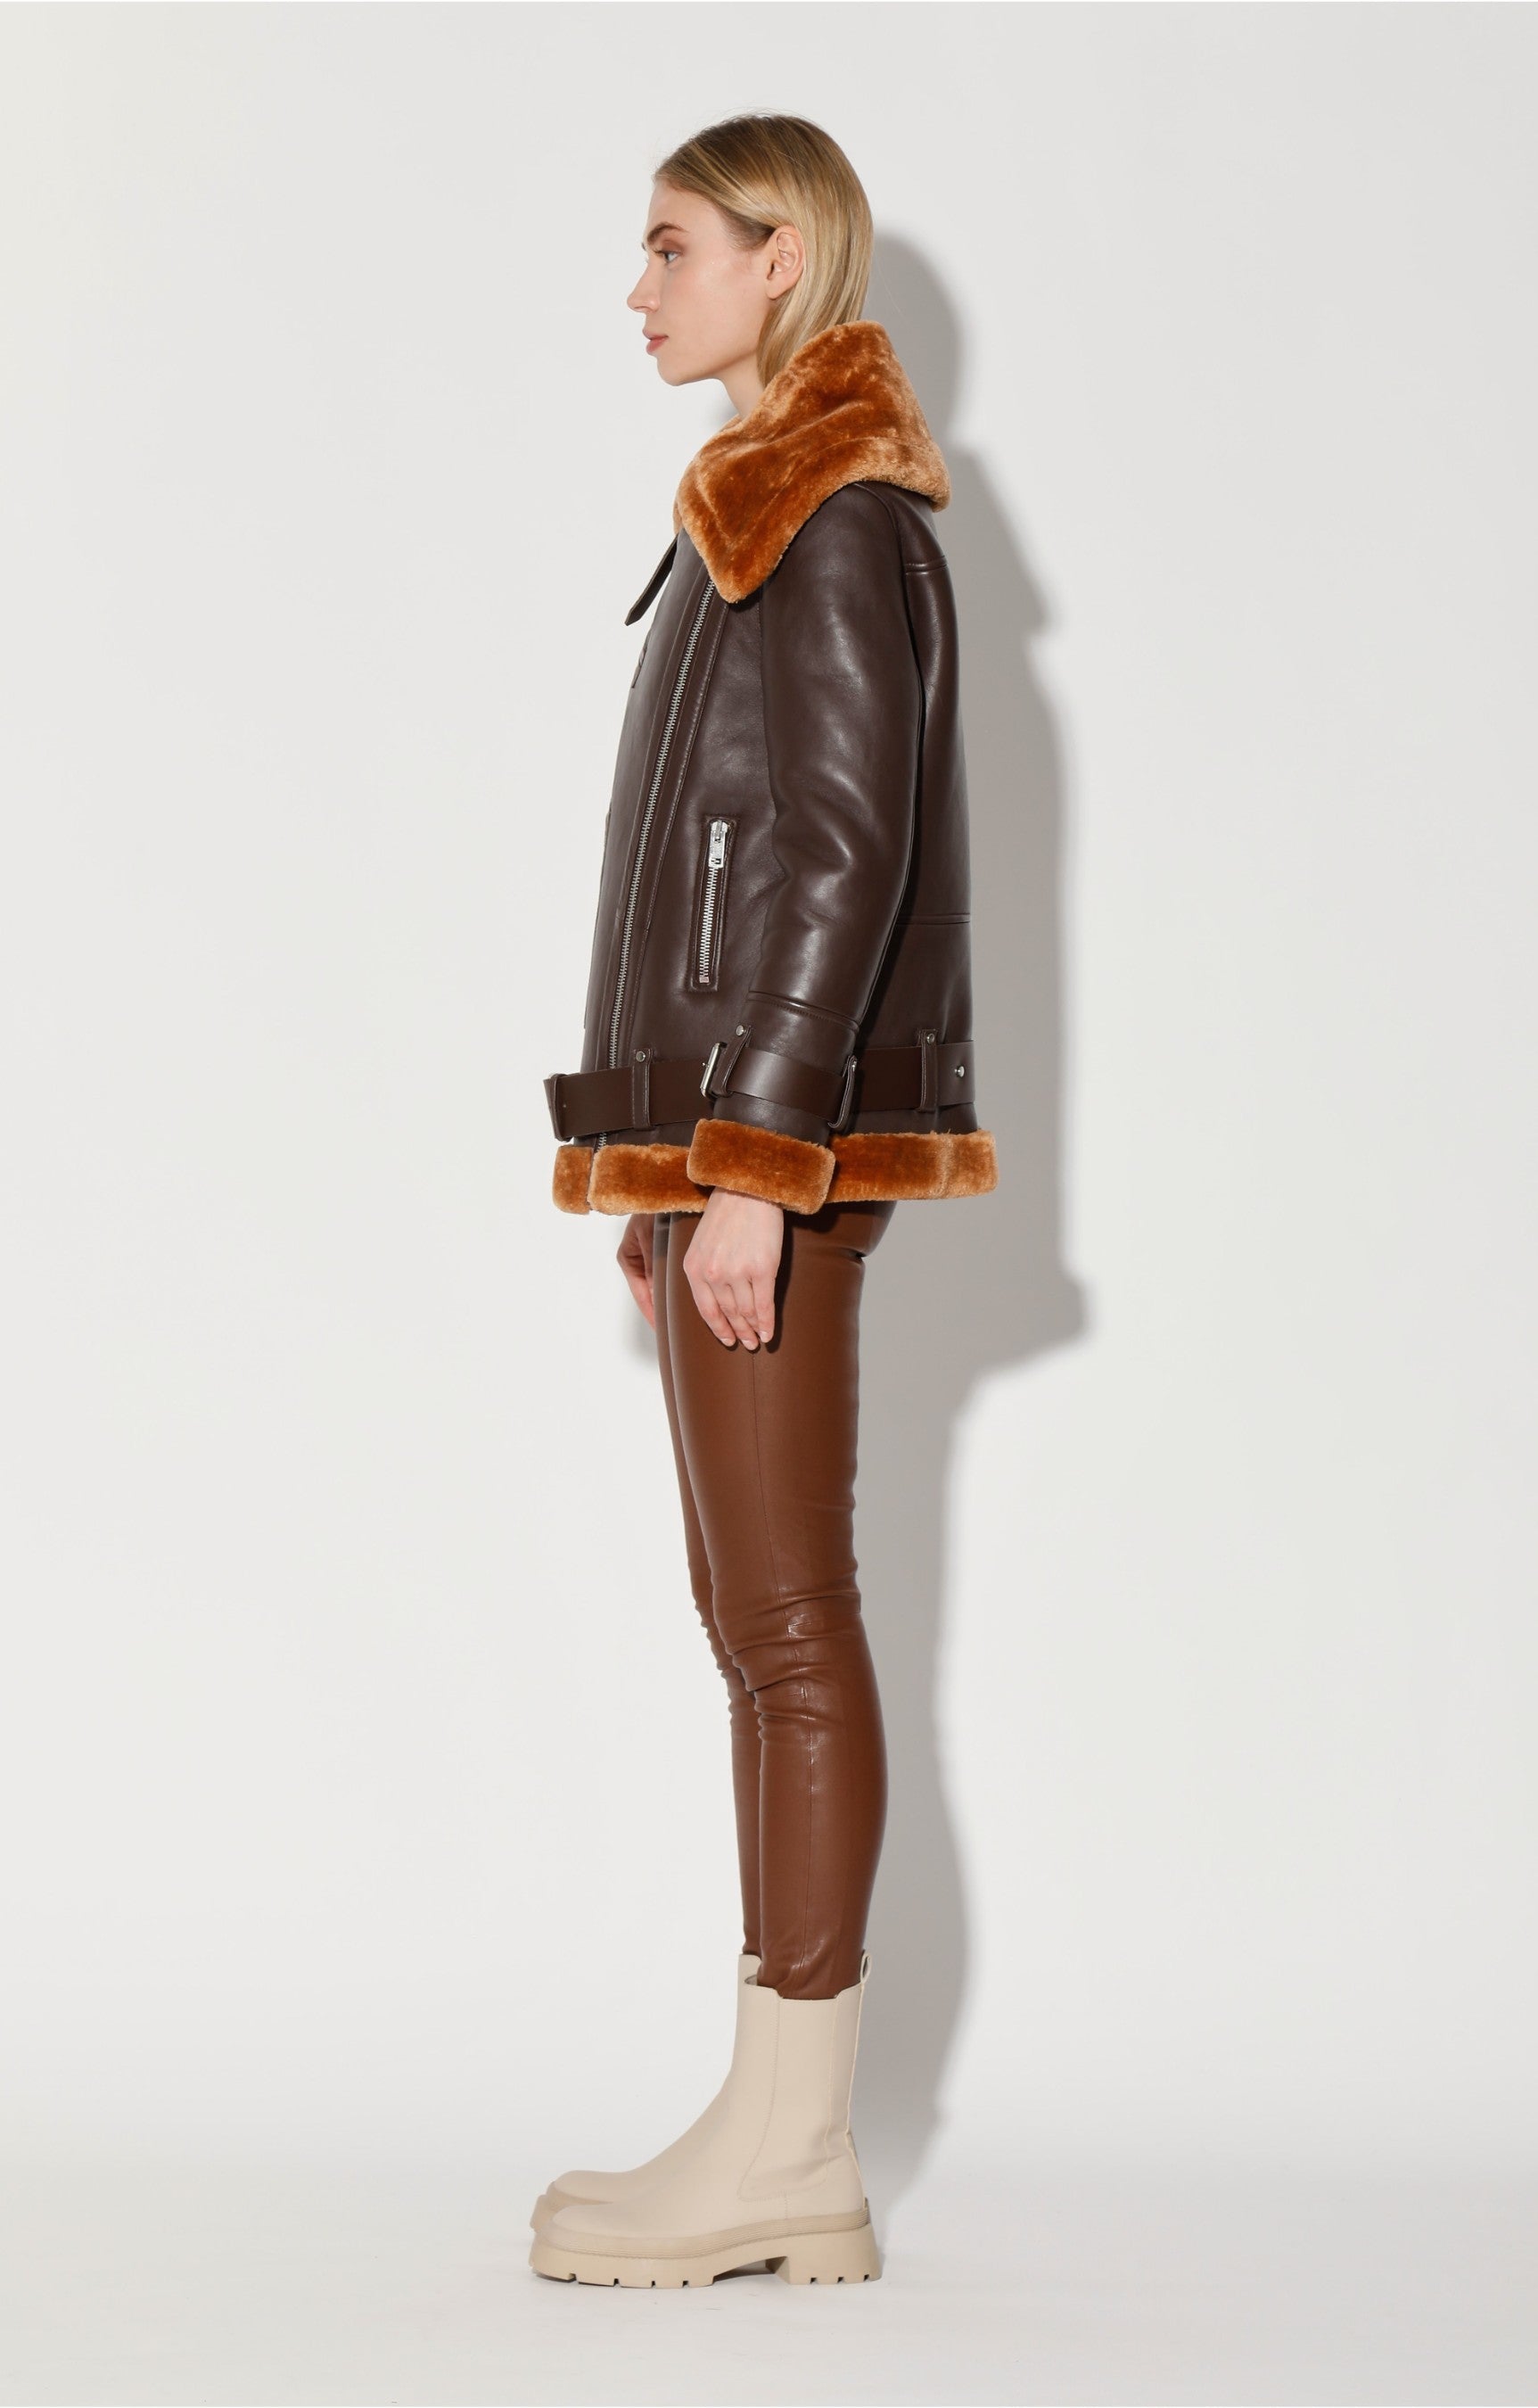 Celine Jacket, Mocha Leather/ Camel Fur by Walter Baker